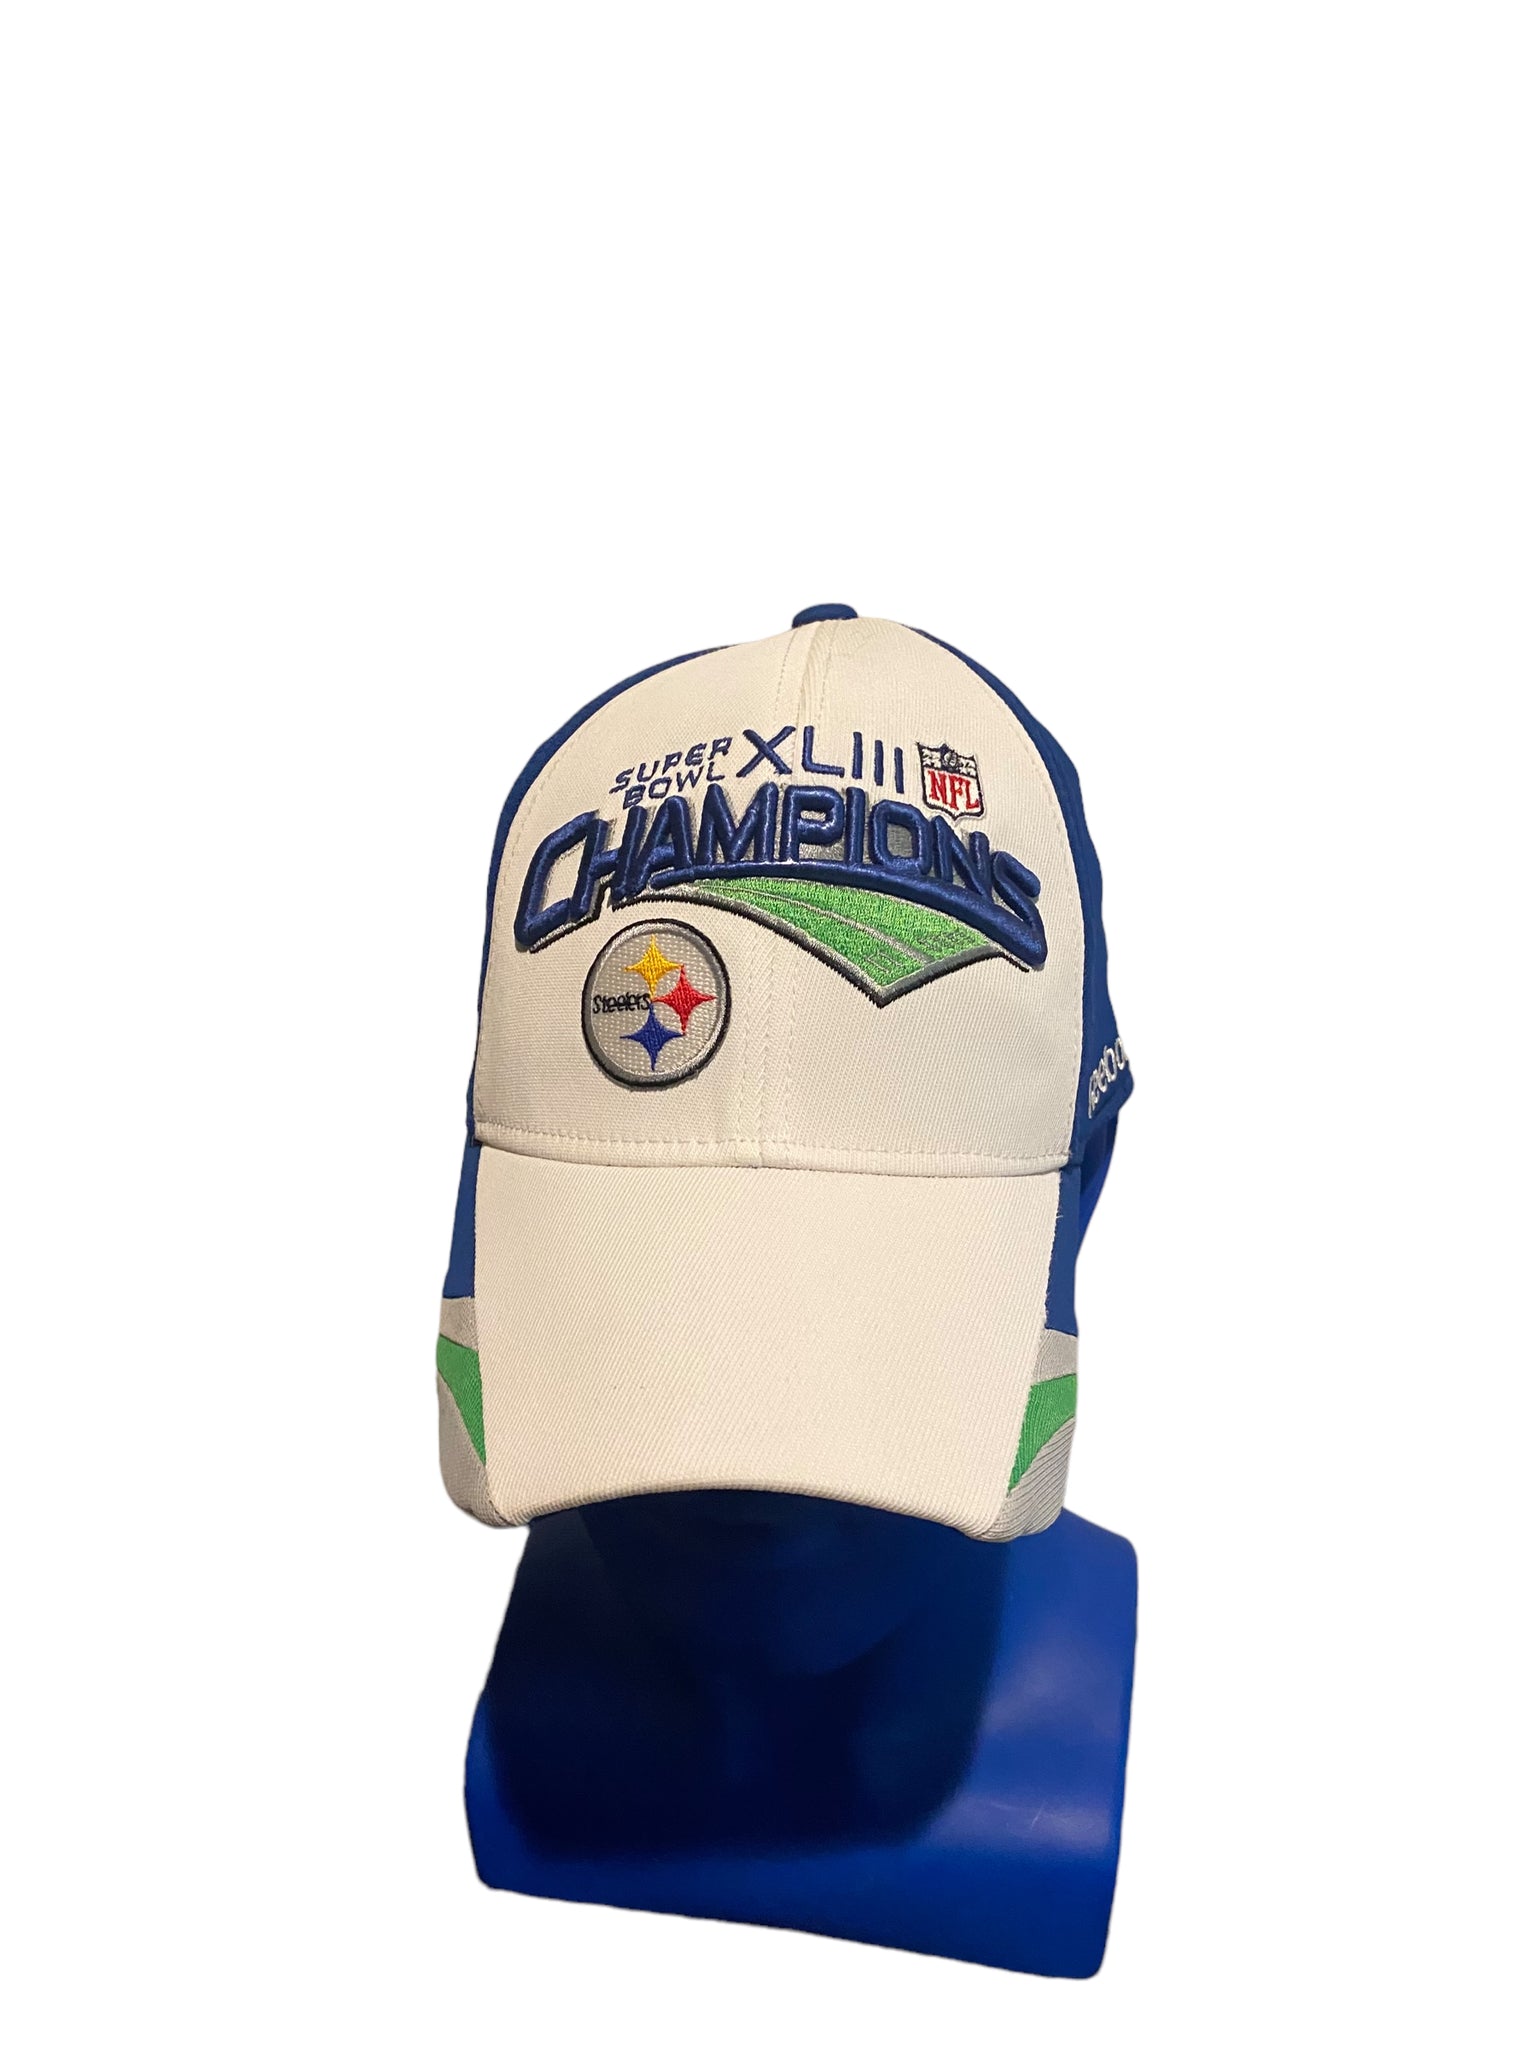 Pittsburgh Steelers Super Bowl XLIII Champions Adjustable Hat Cap NFL Retro 2009